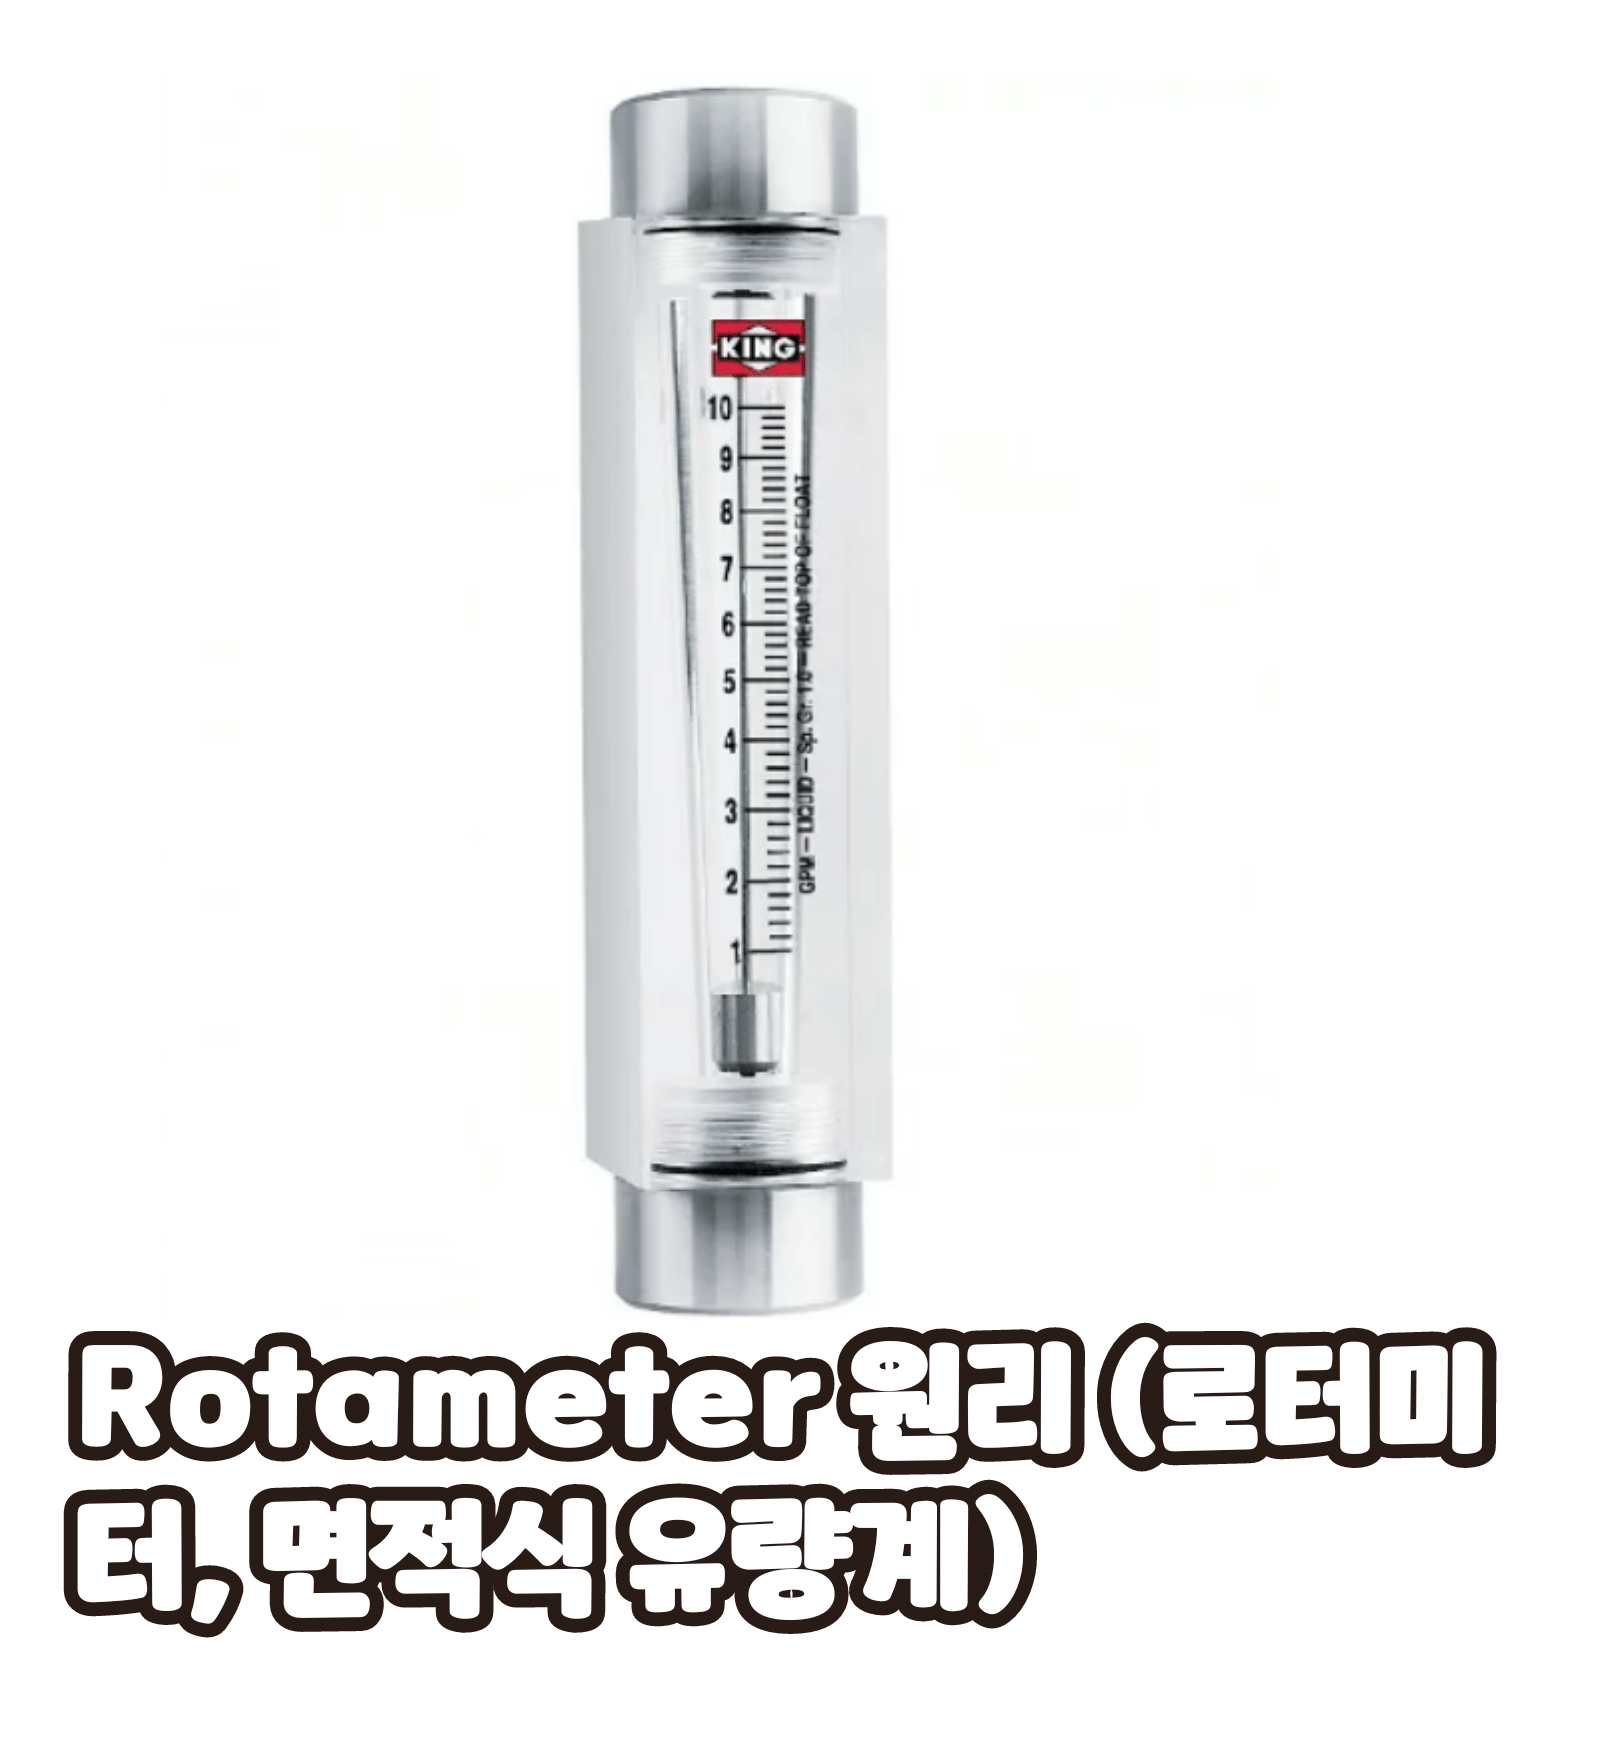 Rotameter 원리 (로터미터, 면적식 유량계)